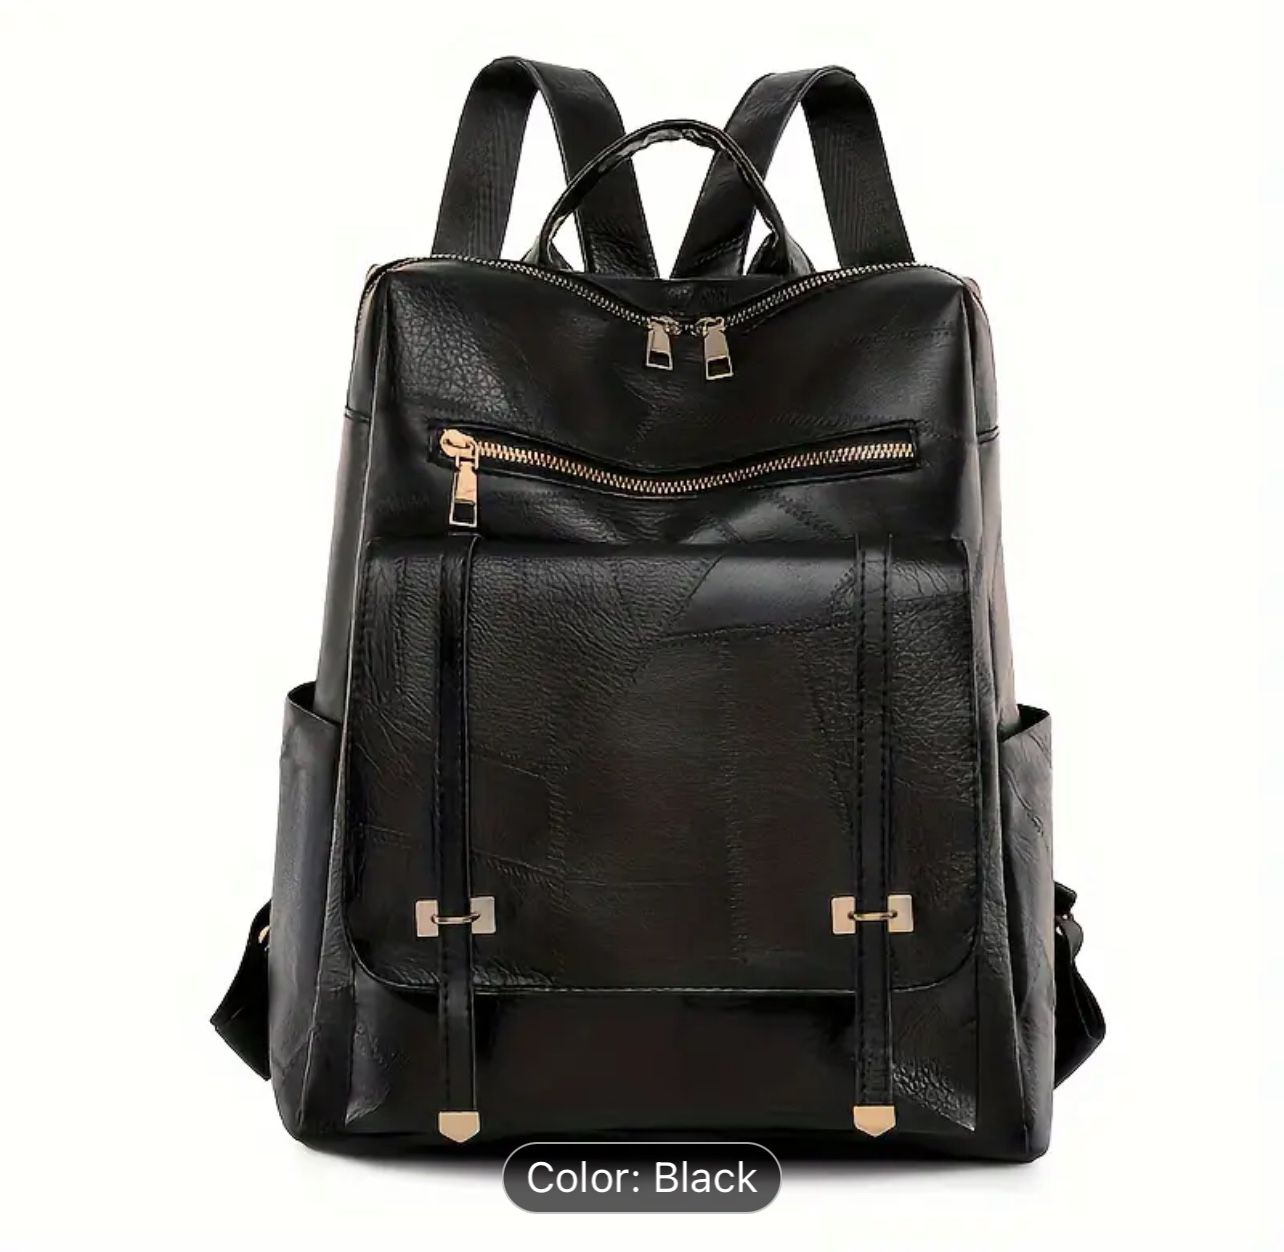 Vintage Functional Flap Backpack Purse, Retro Zipper Daypack, Women's Casual School & Travel Bag